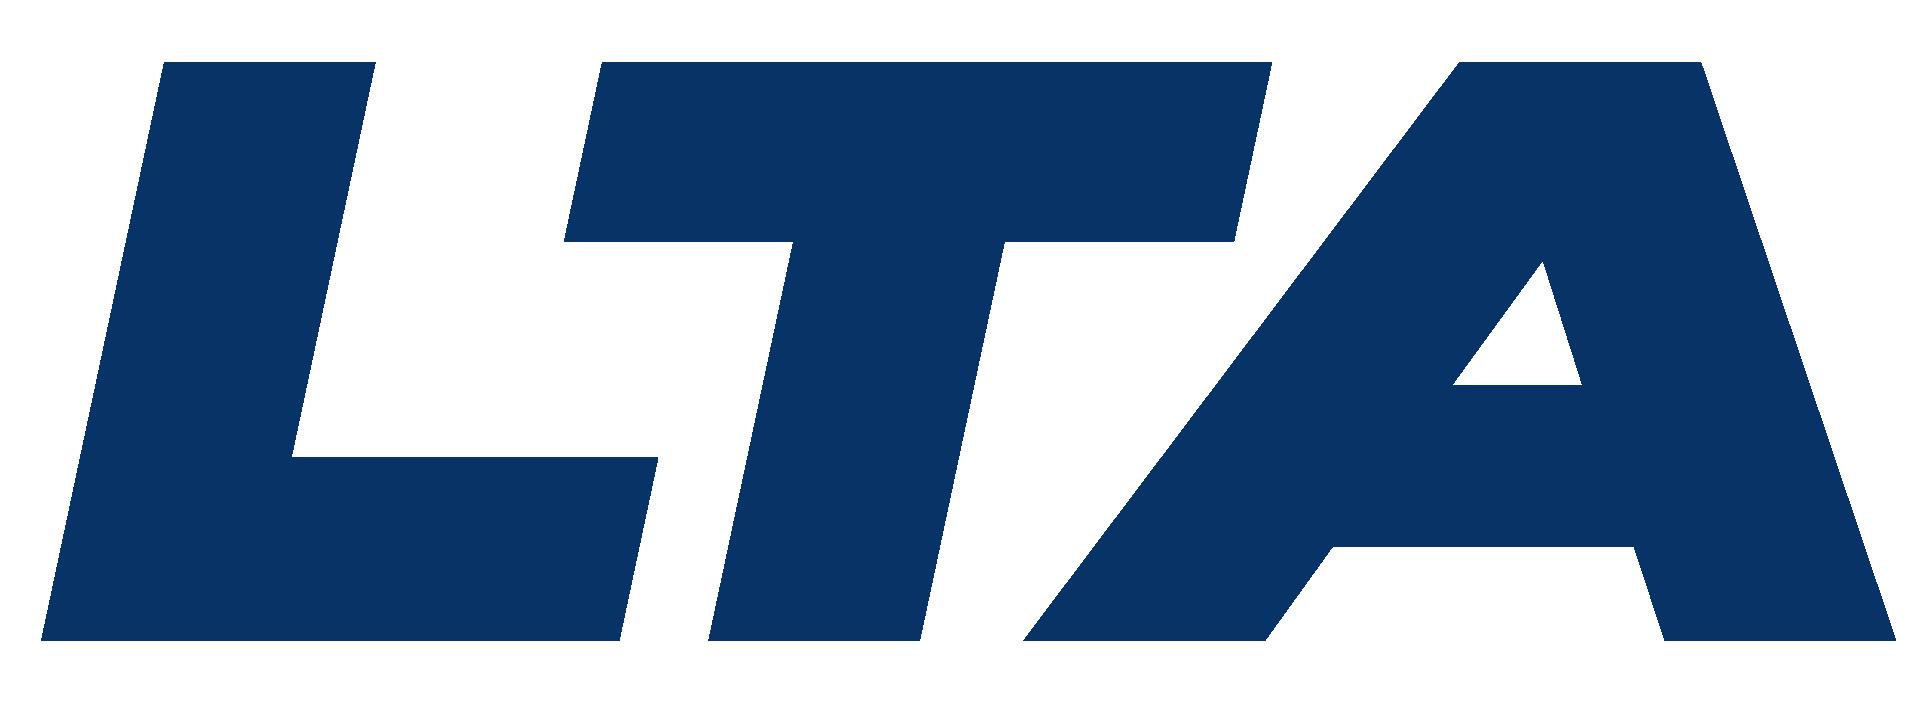 Logistik   Transport Agentur GmbH Logo